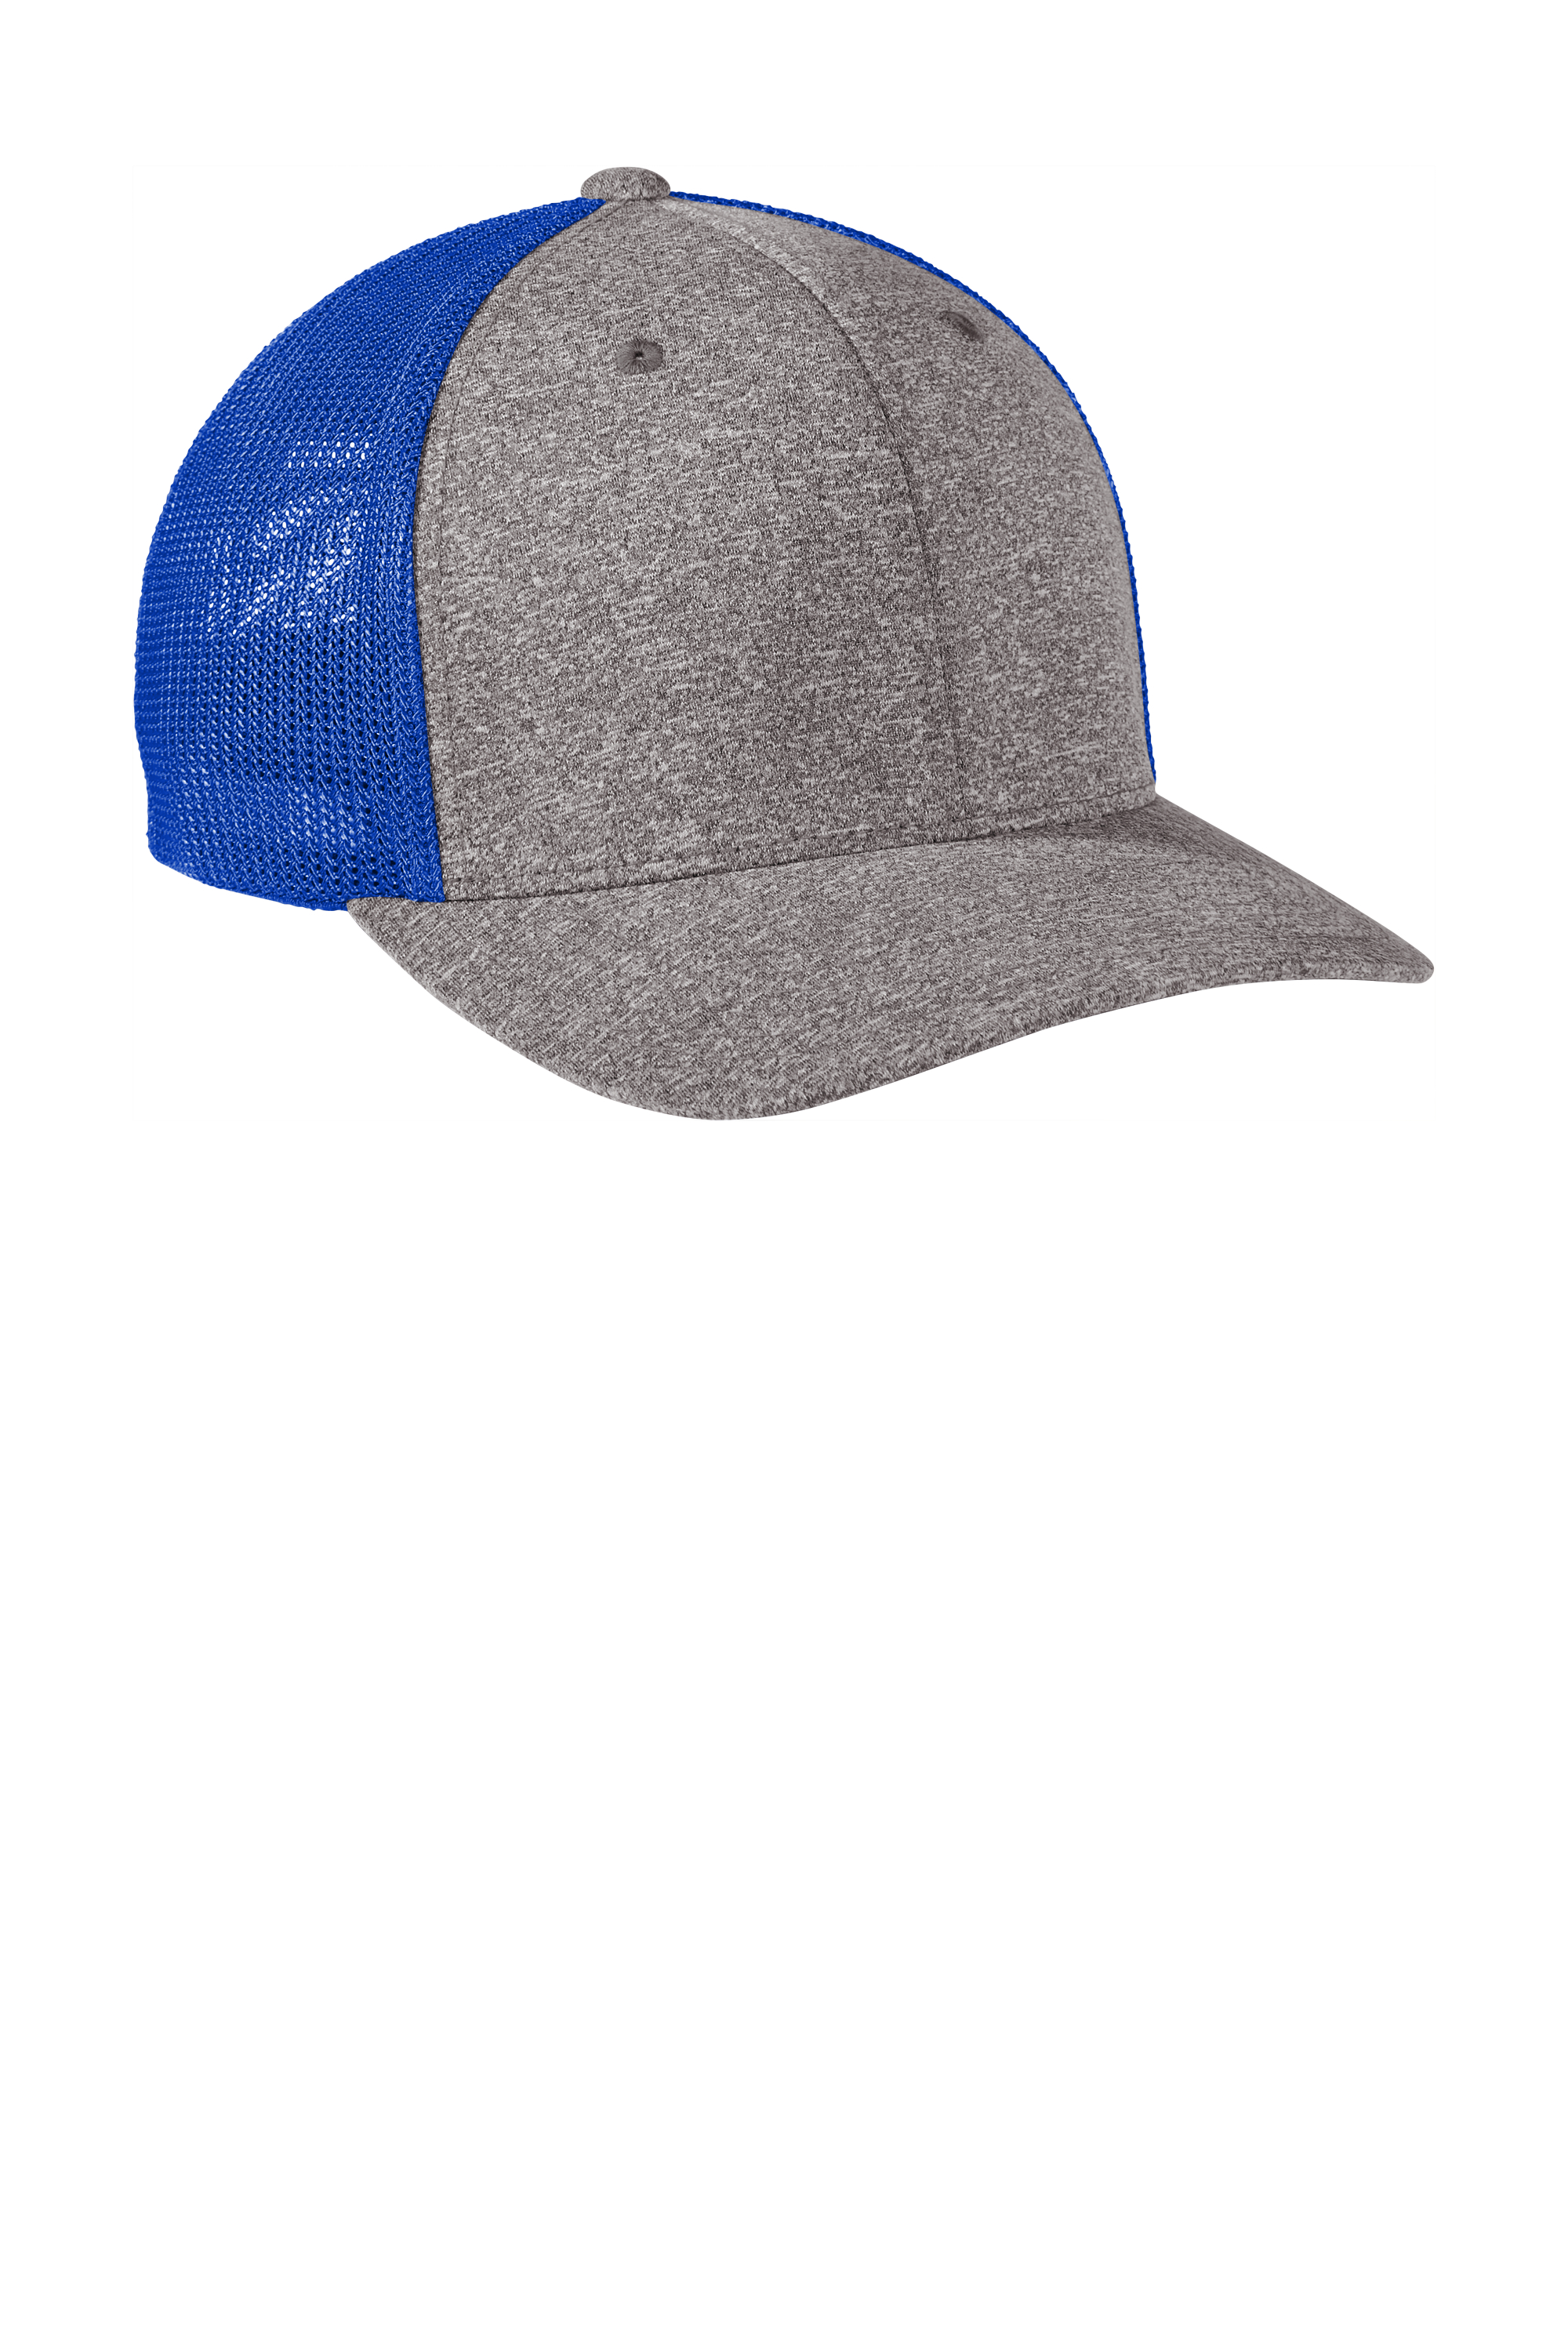 Embroidered jersey number 8 flexfit baseball cap hat